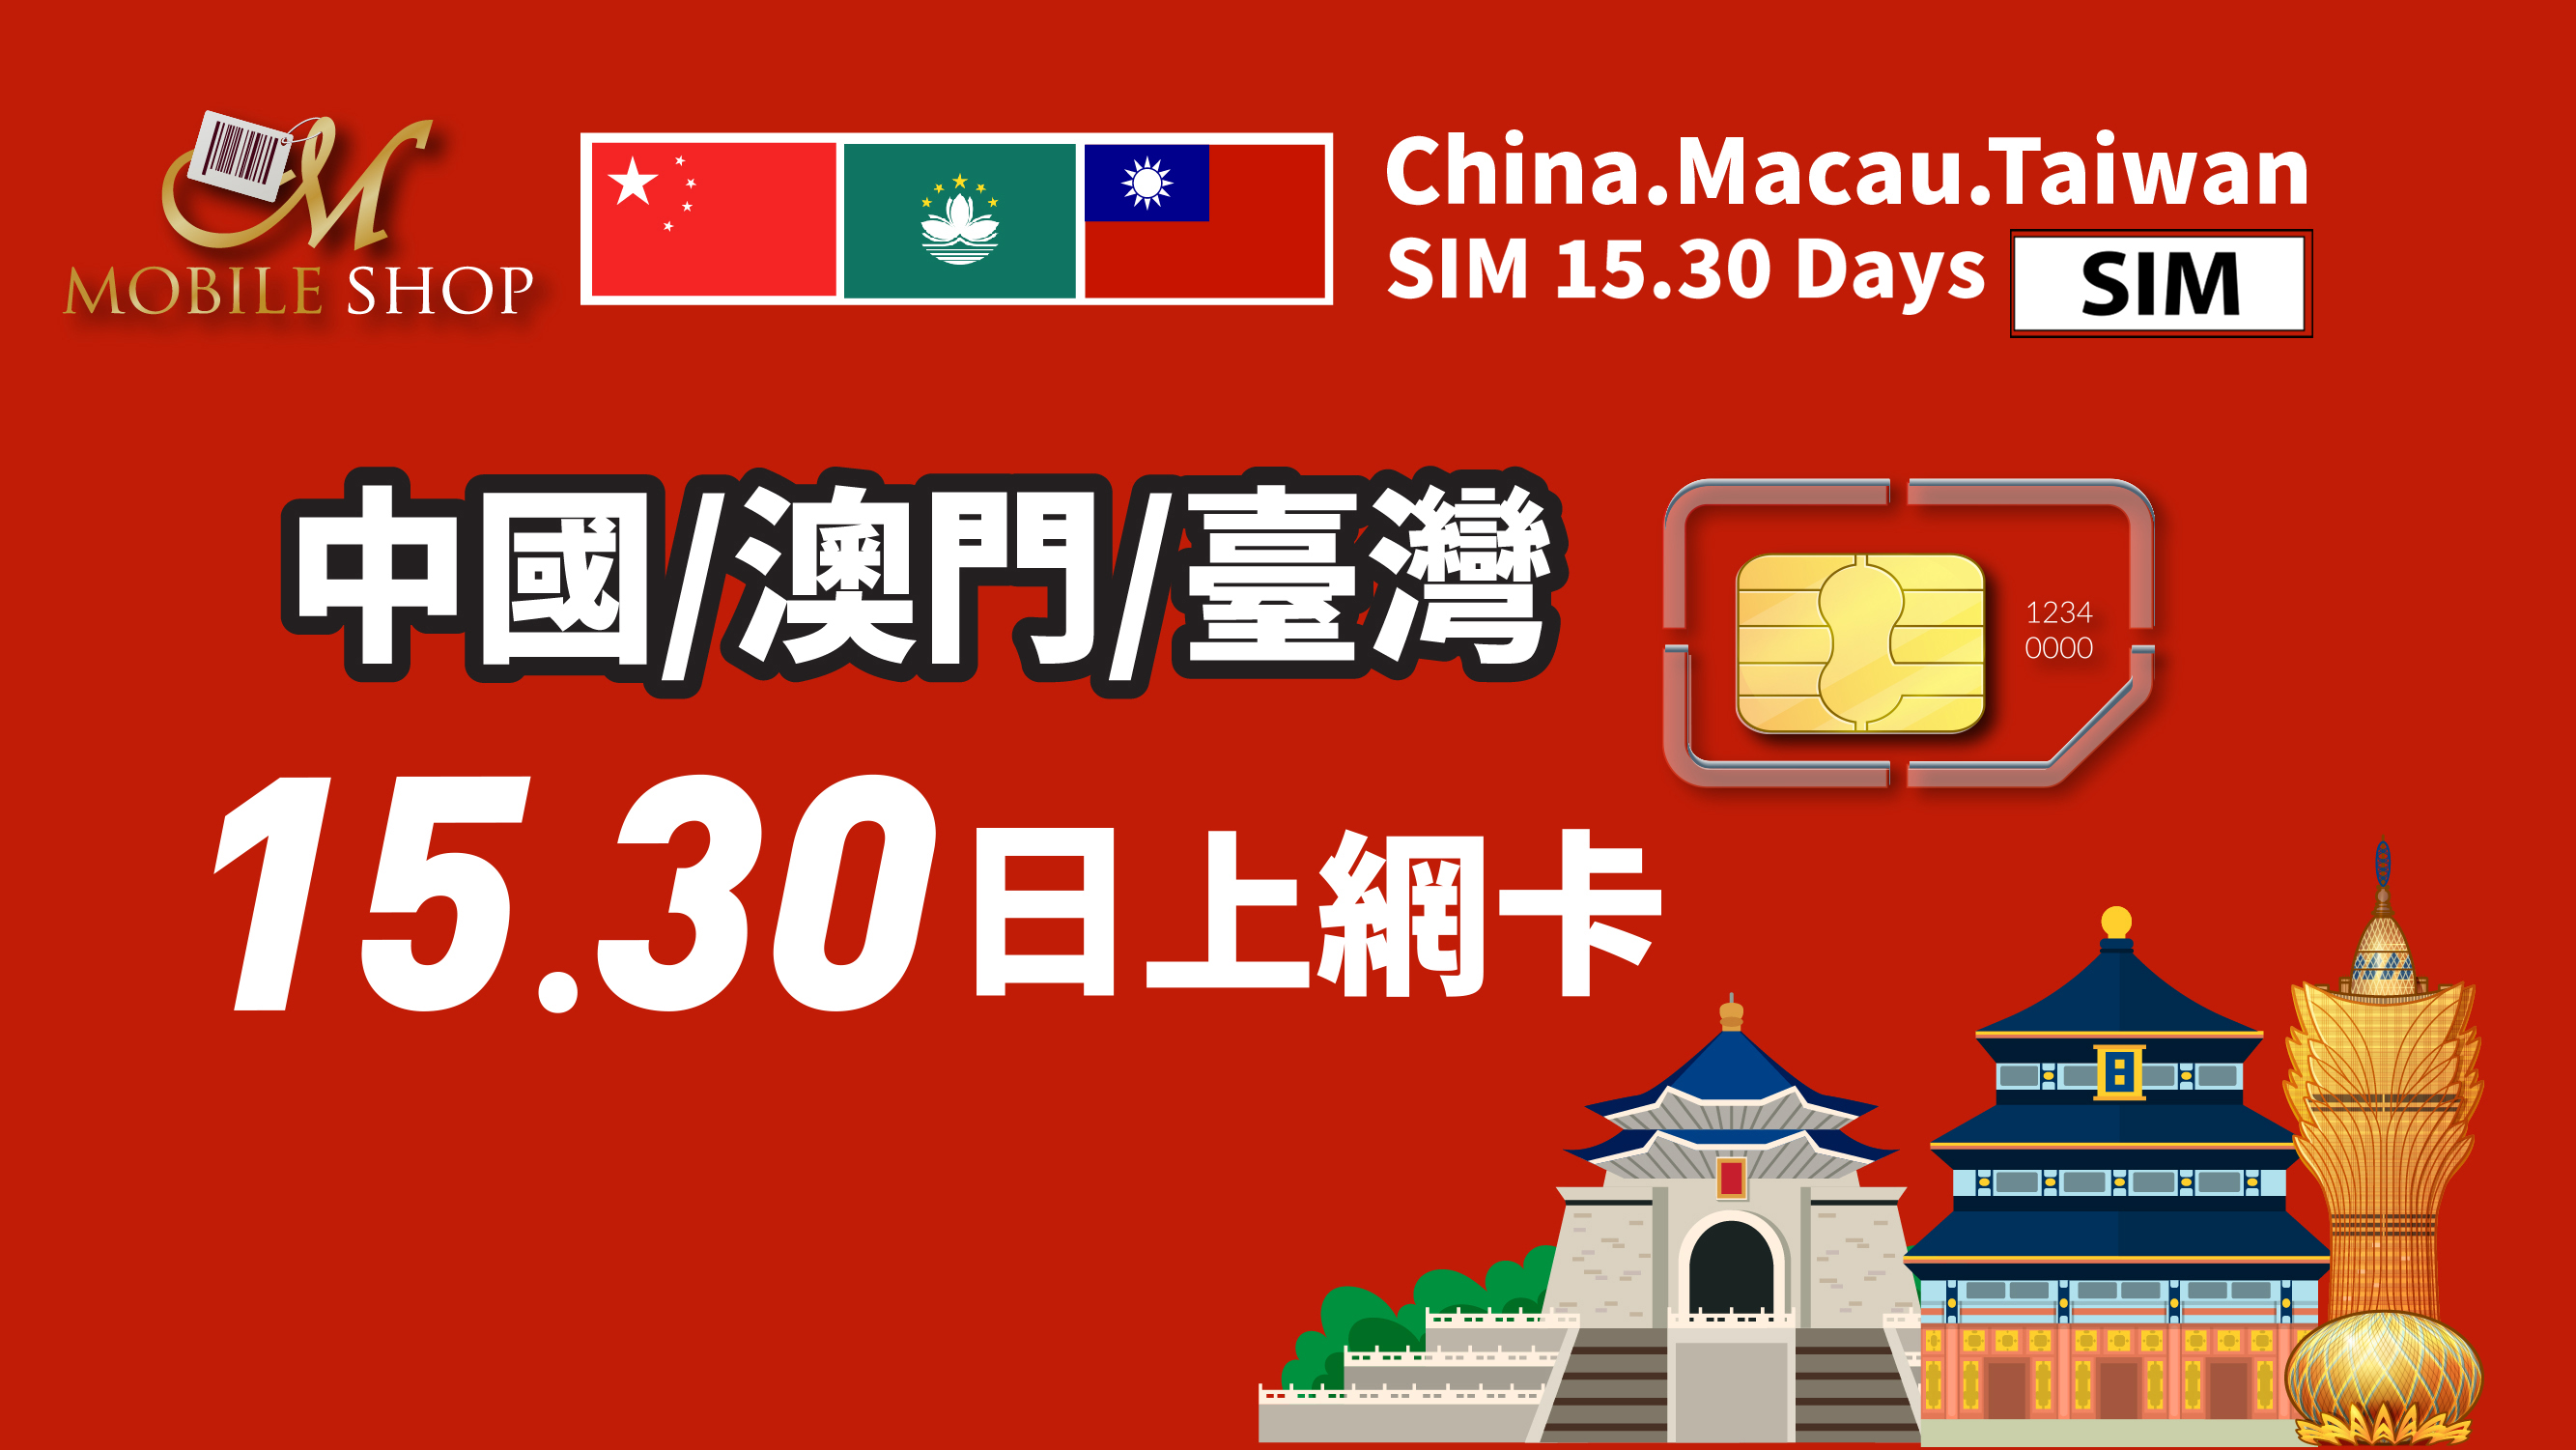 SIM_China. Macau. Taiwan 15days/30days